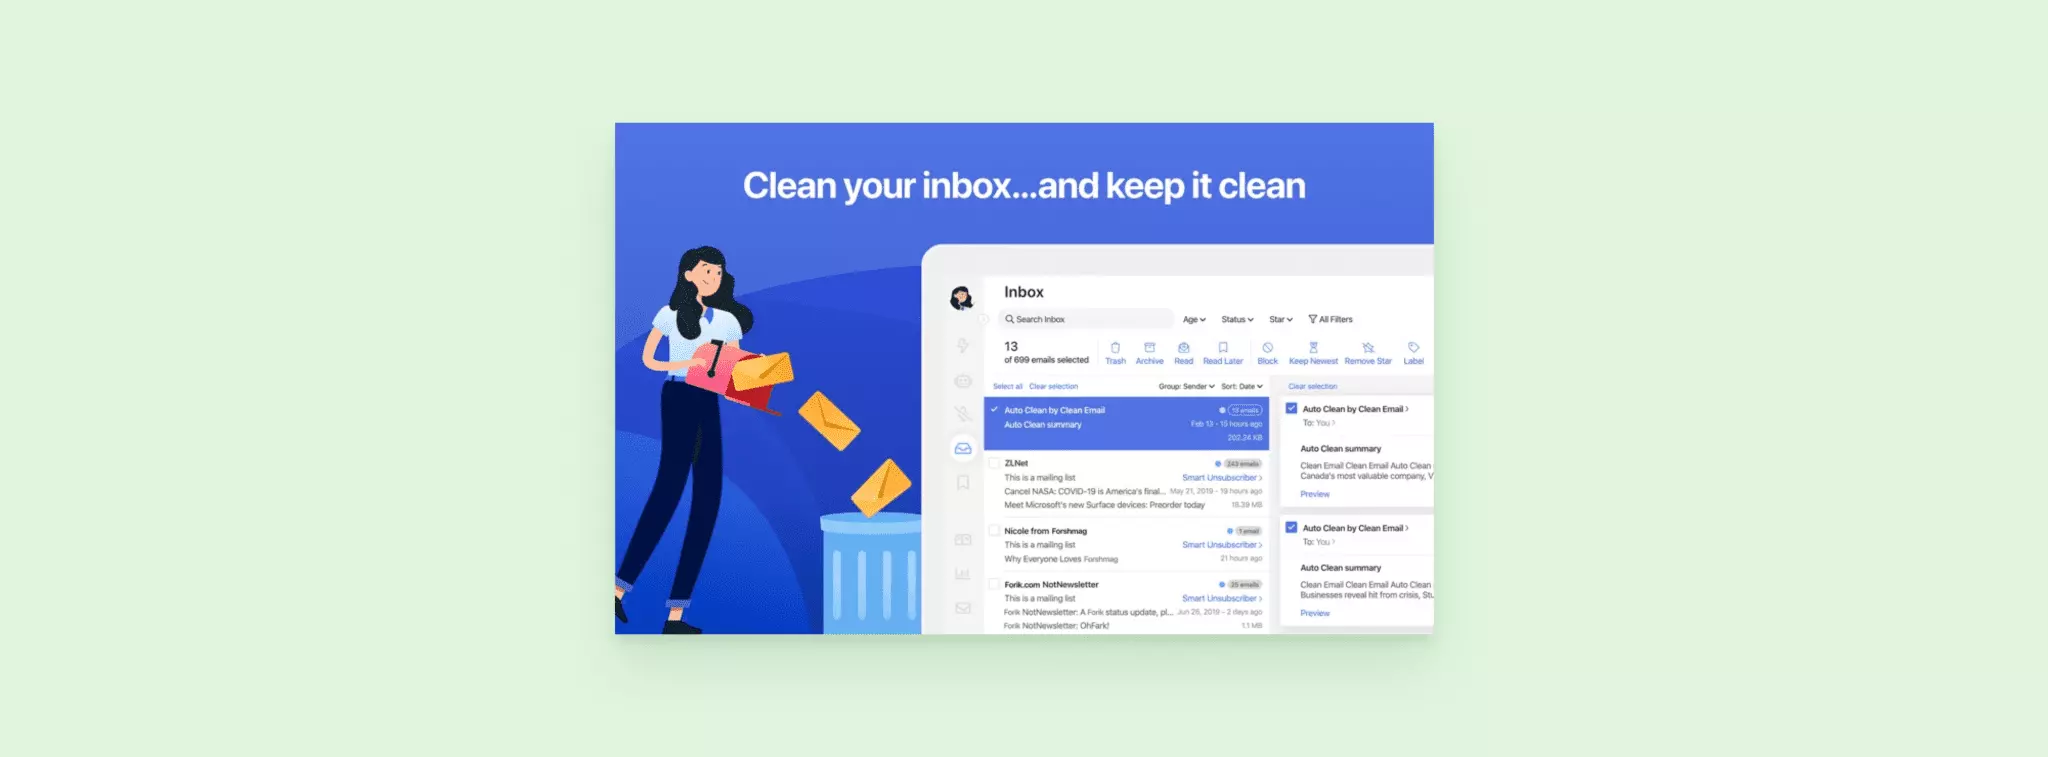 Clean email app